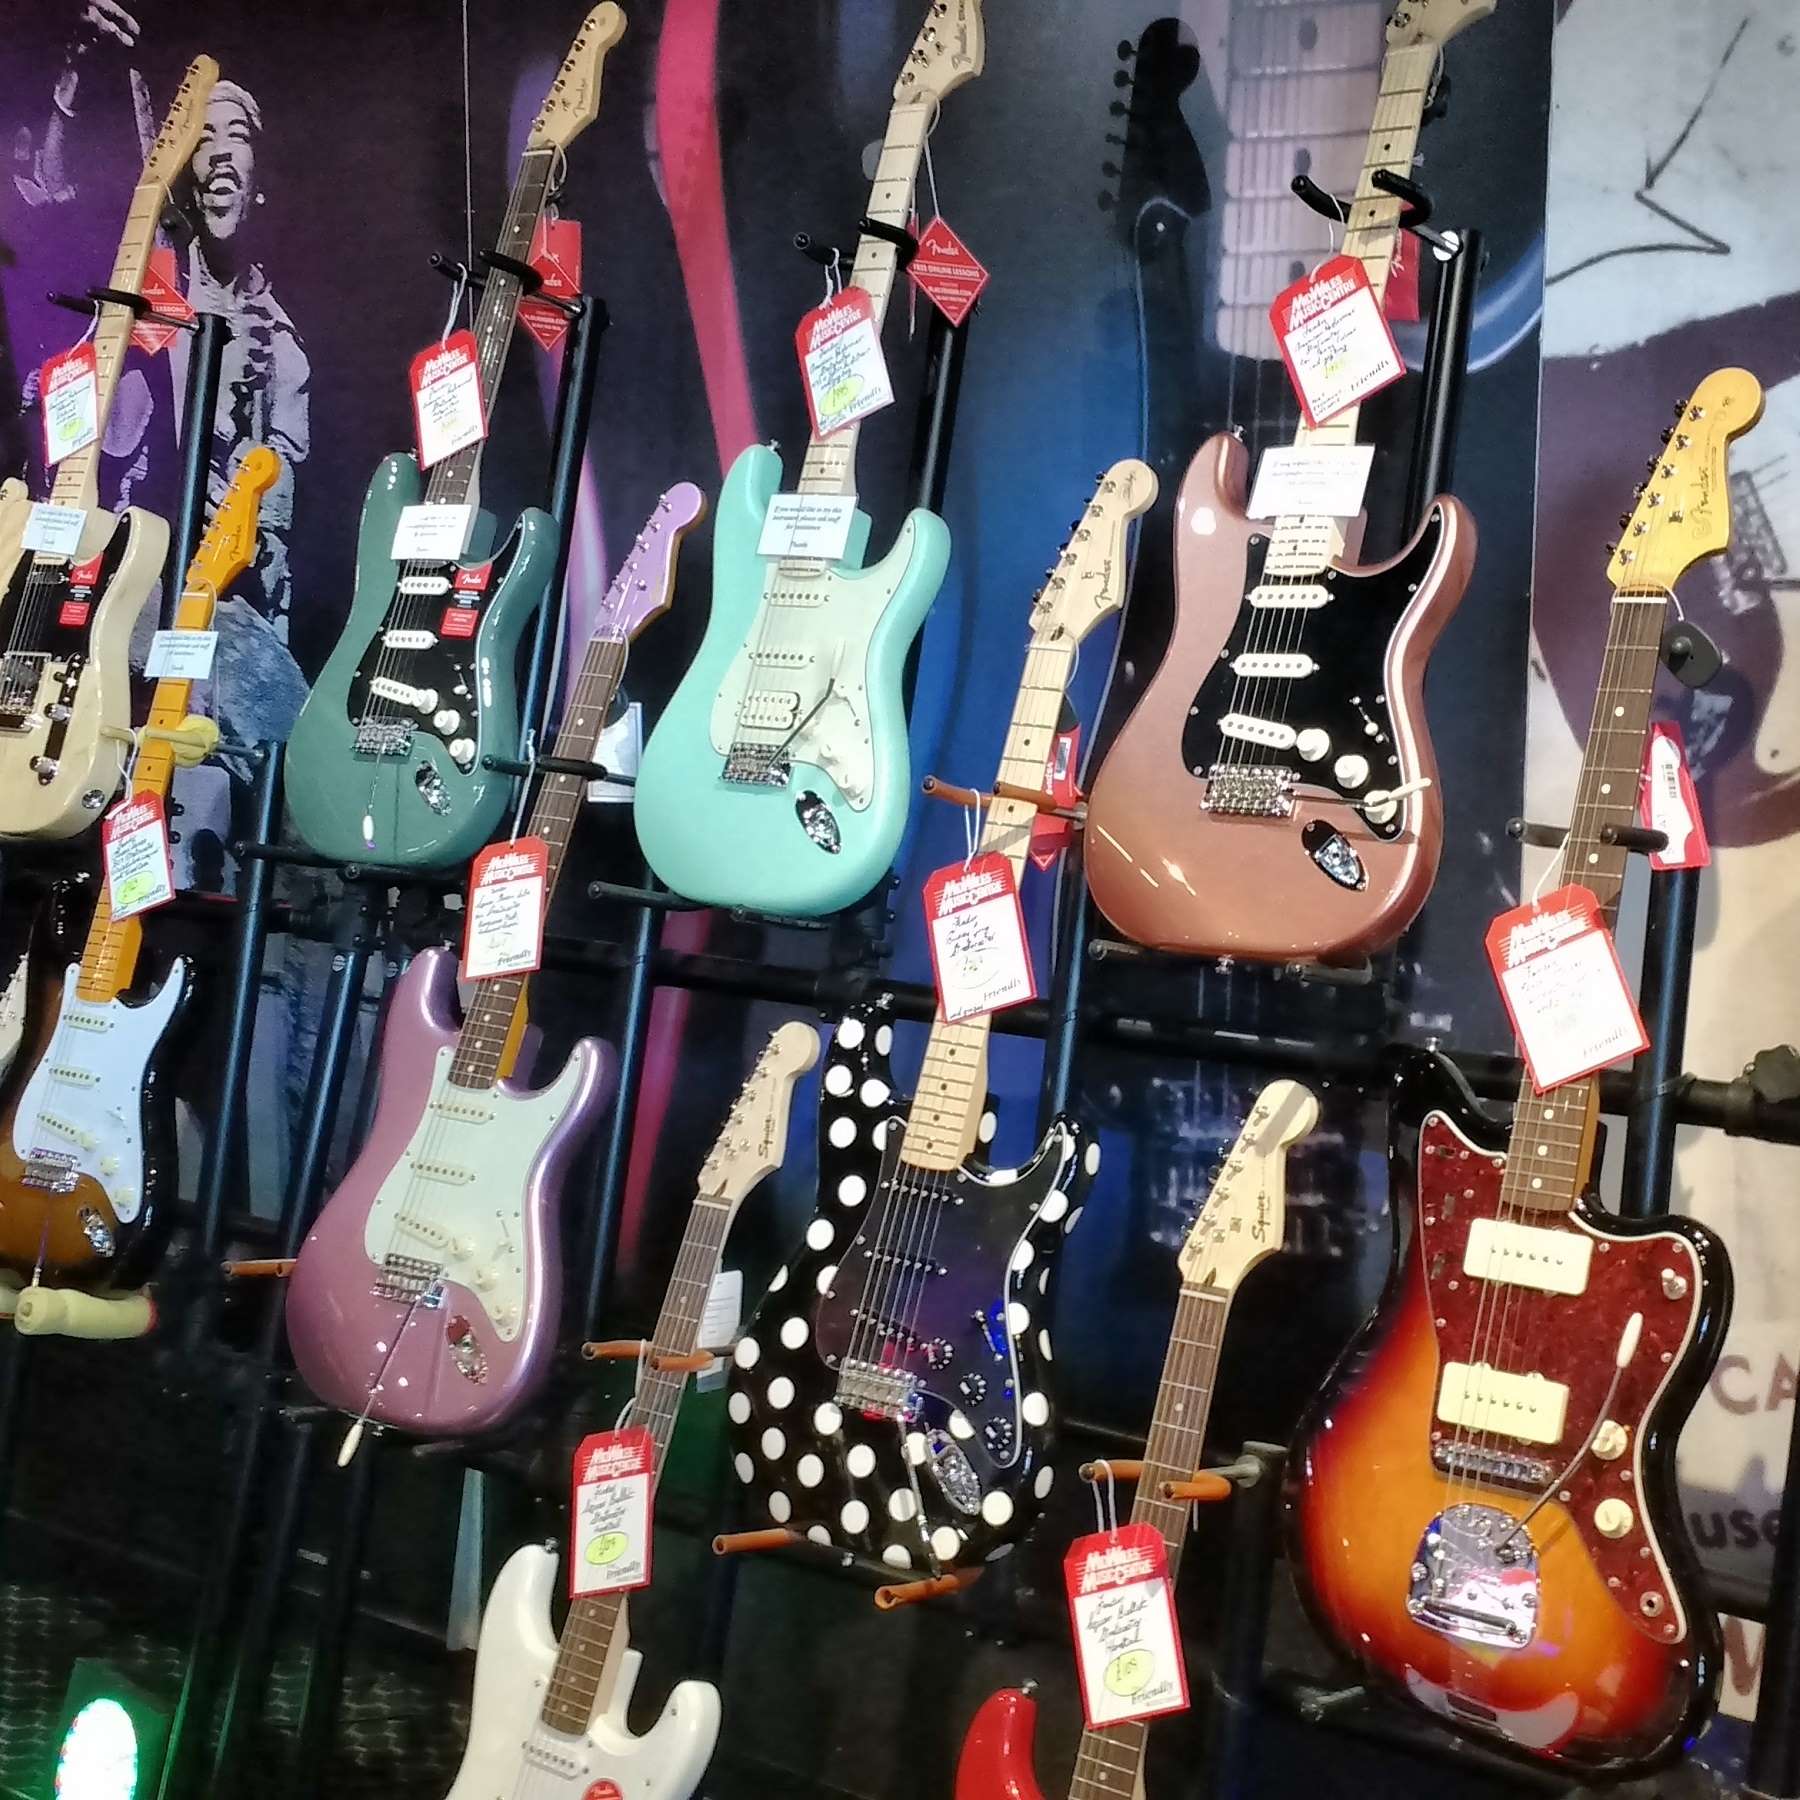 Fender guitar display